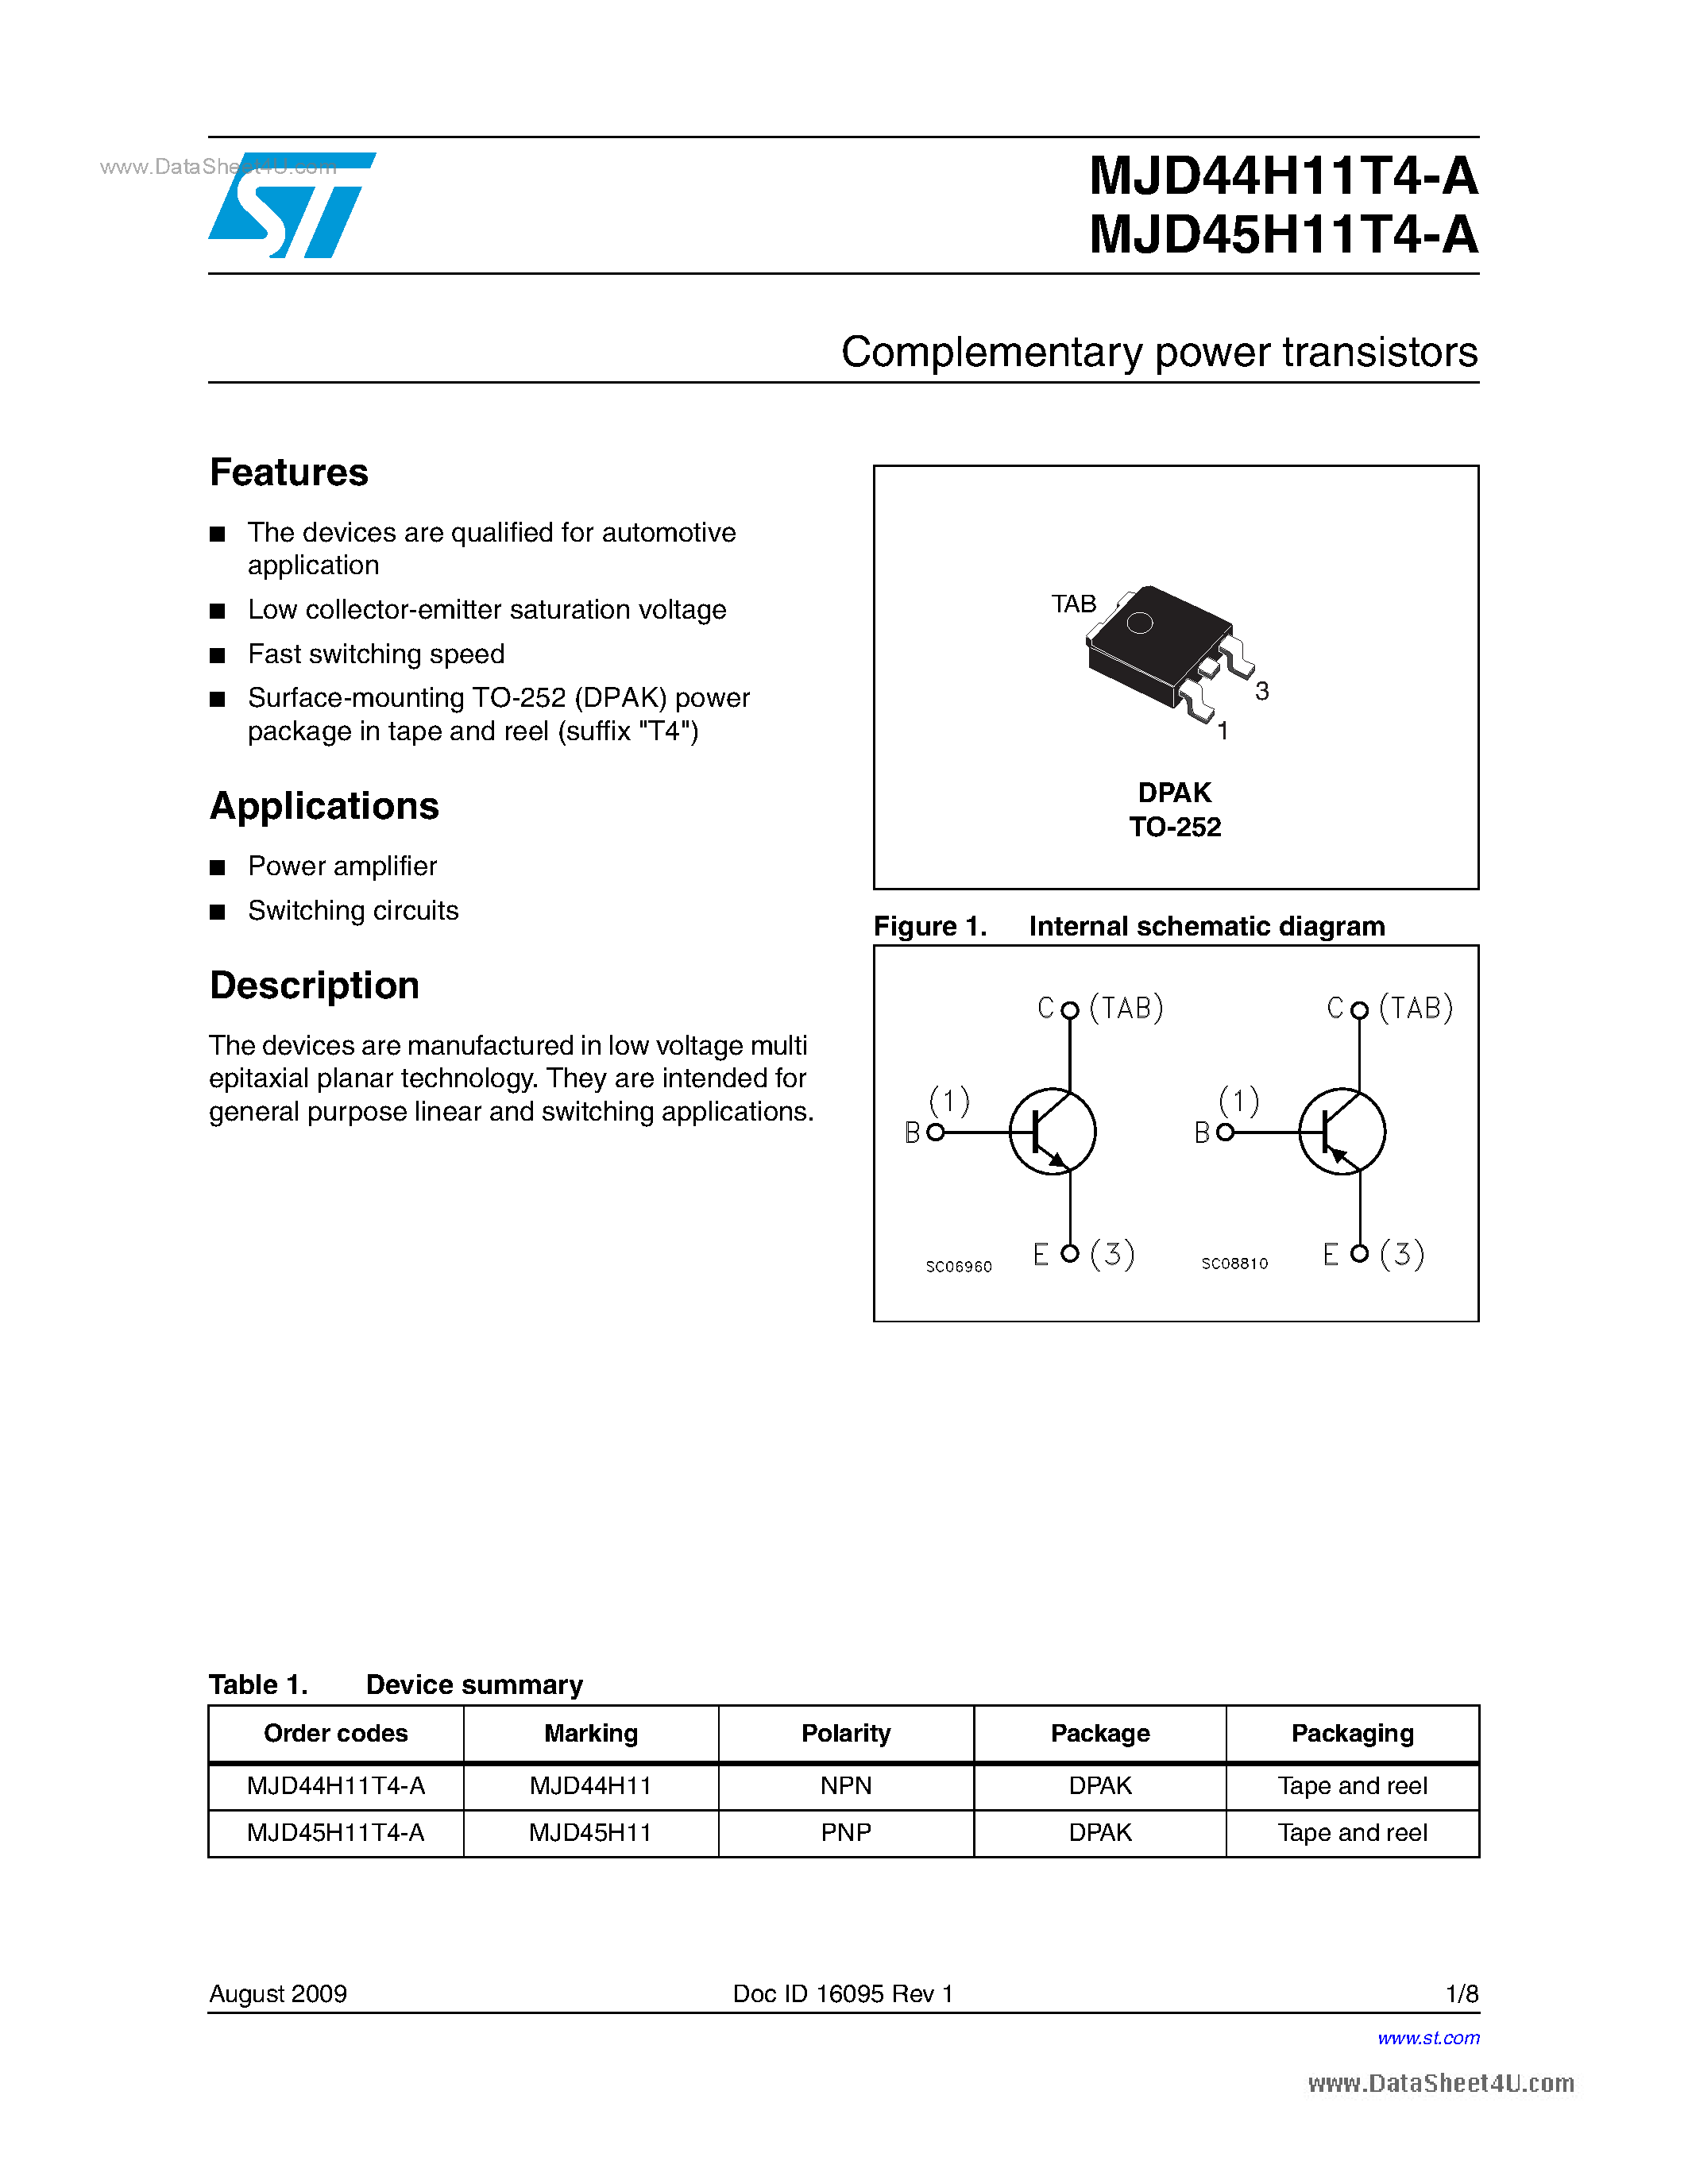 Даташит MJD44H11T4-A-(MJD44H11T4-A / MJD44H11T4-A) Complementary power transistors страница 1